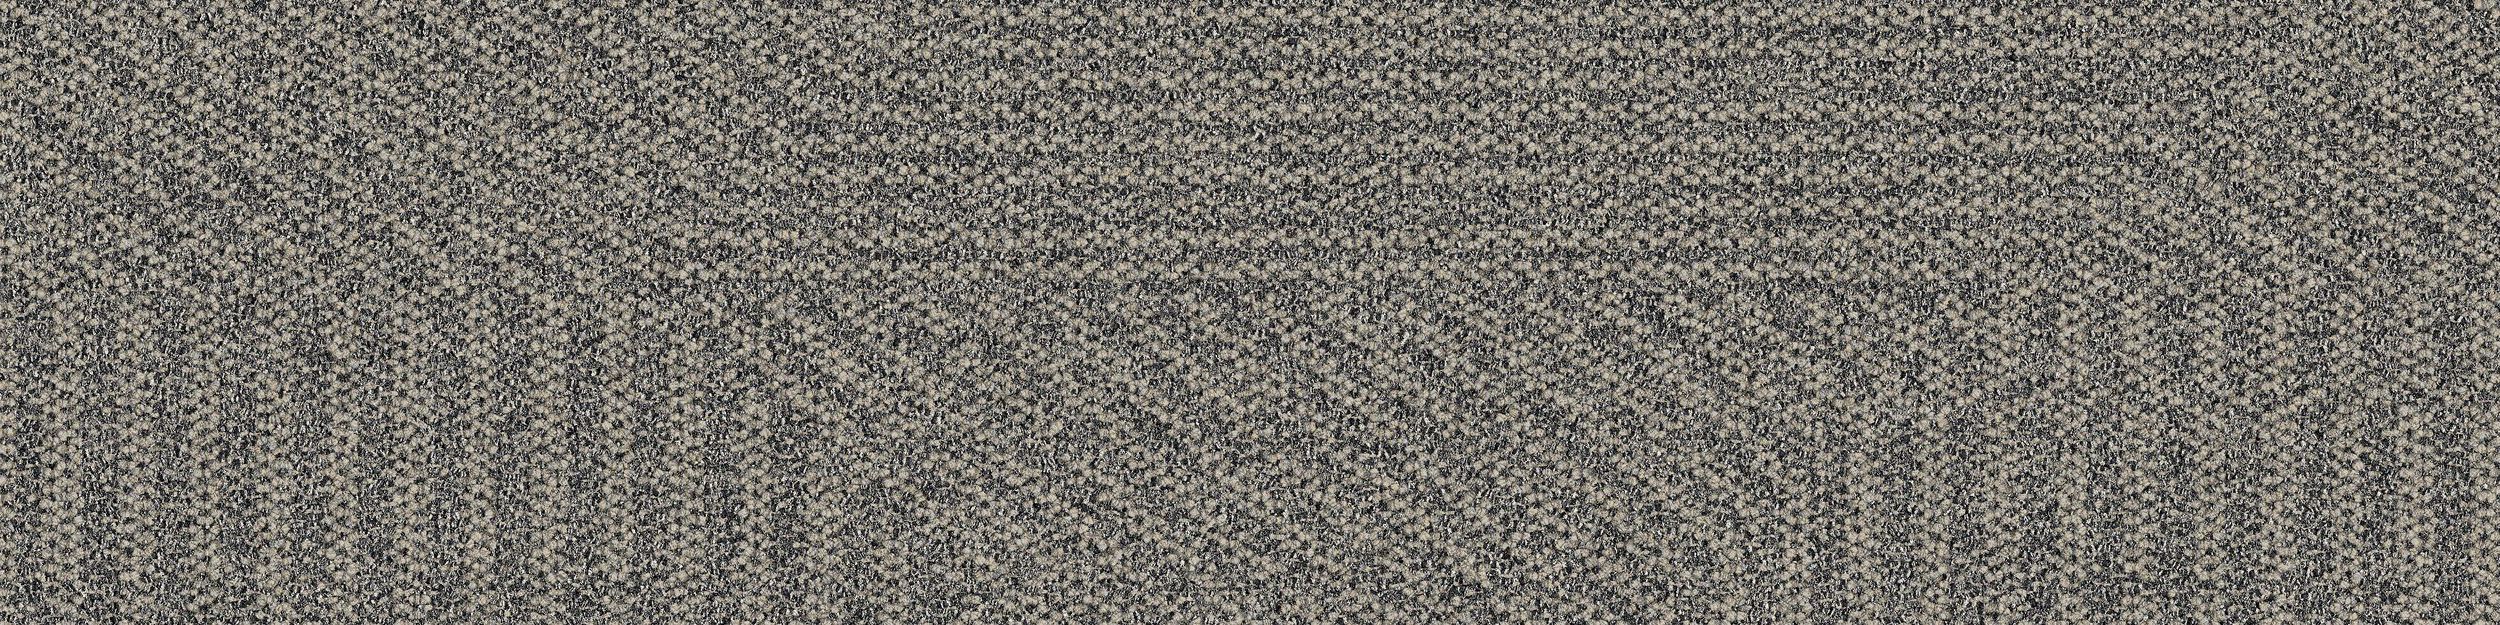 Open Air 407 Carpet Tile In Natural image number 2